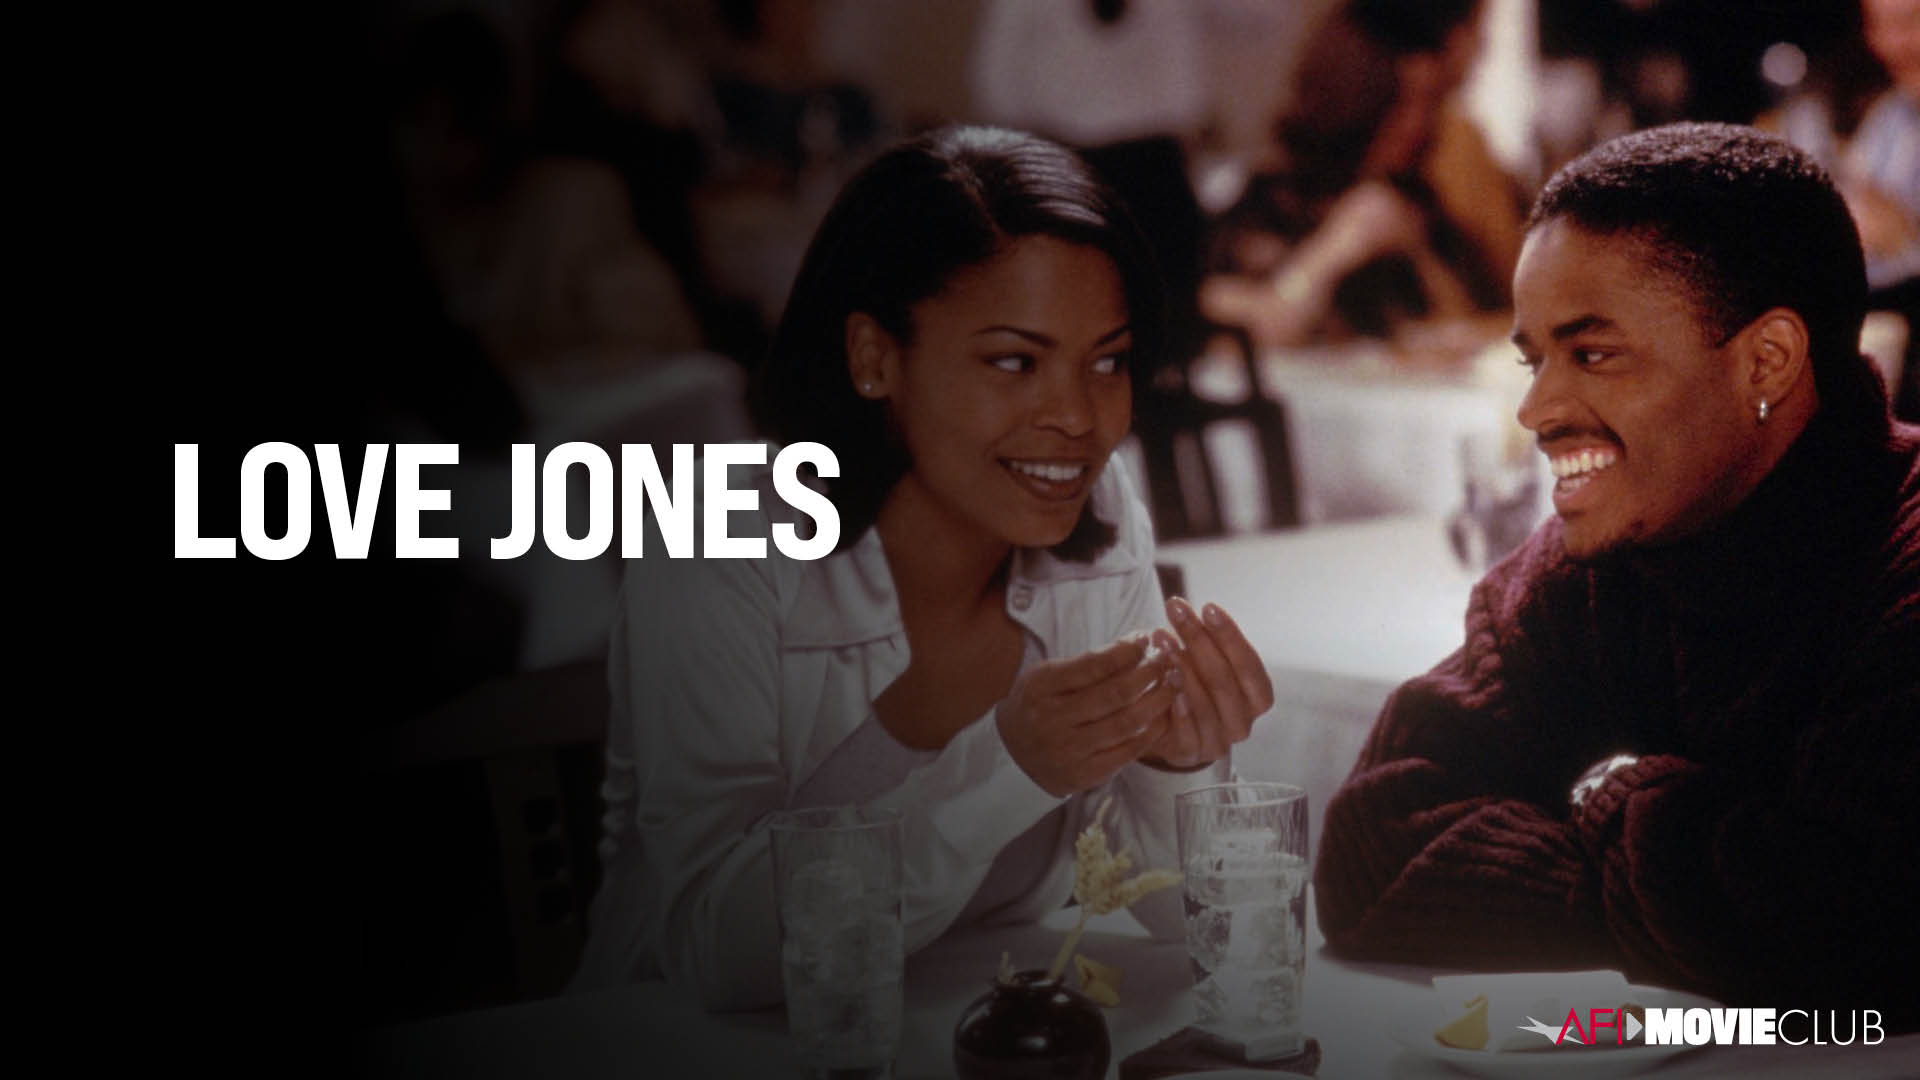 Love Jones Film Still - Nia Long and Larenz Tate